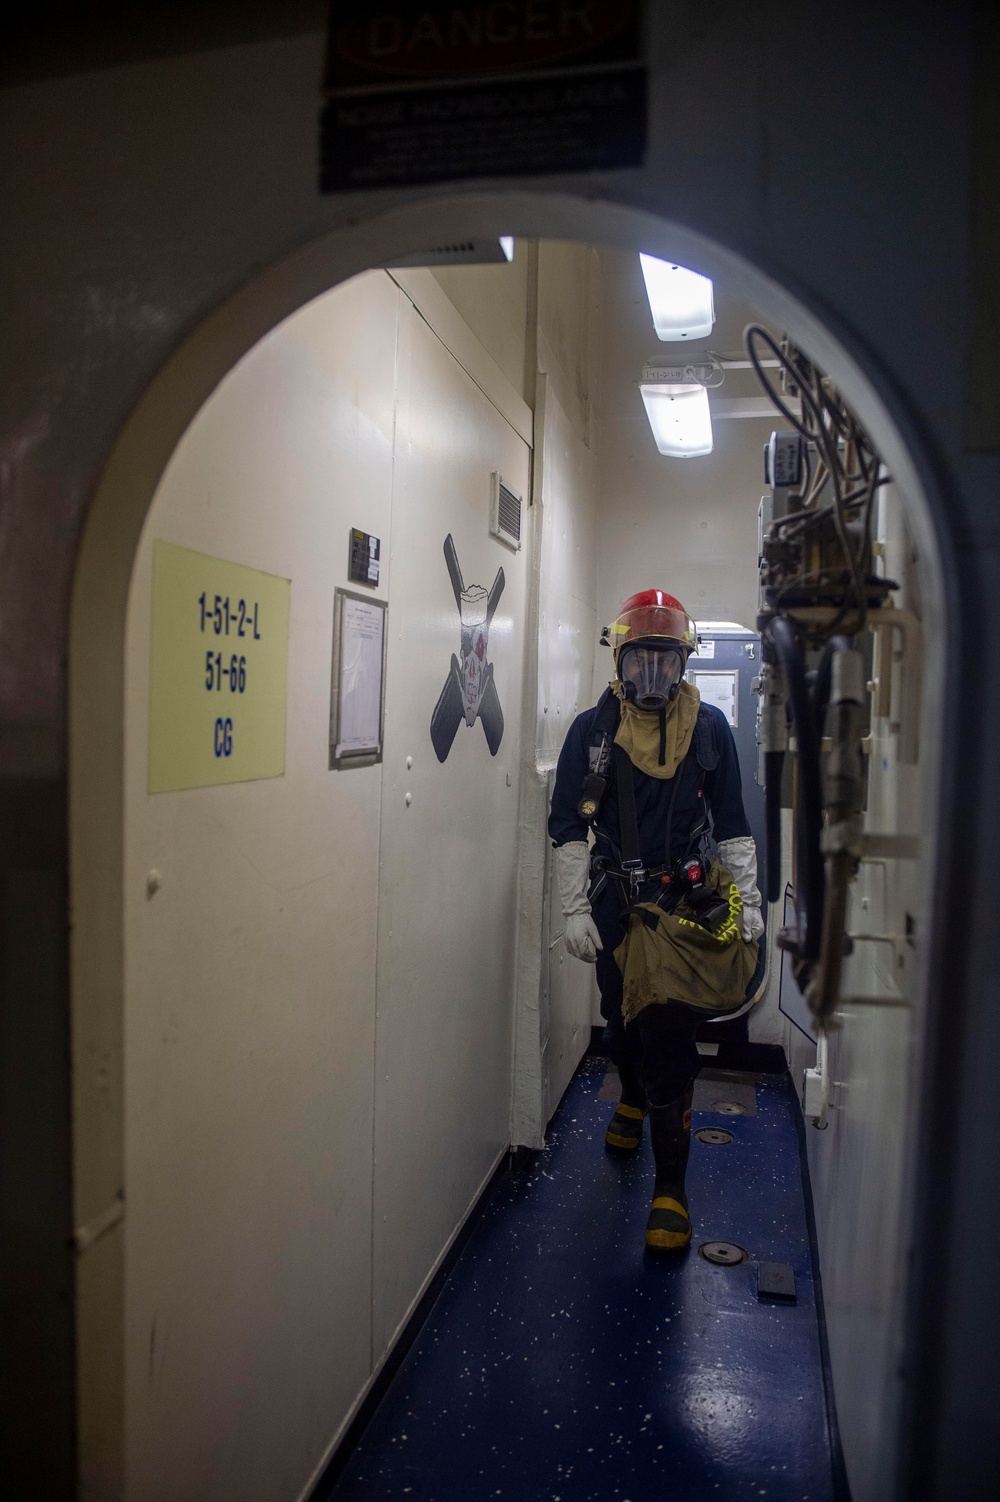 General Quarters Drill Aboard the USS John Paul Jones